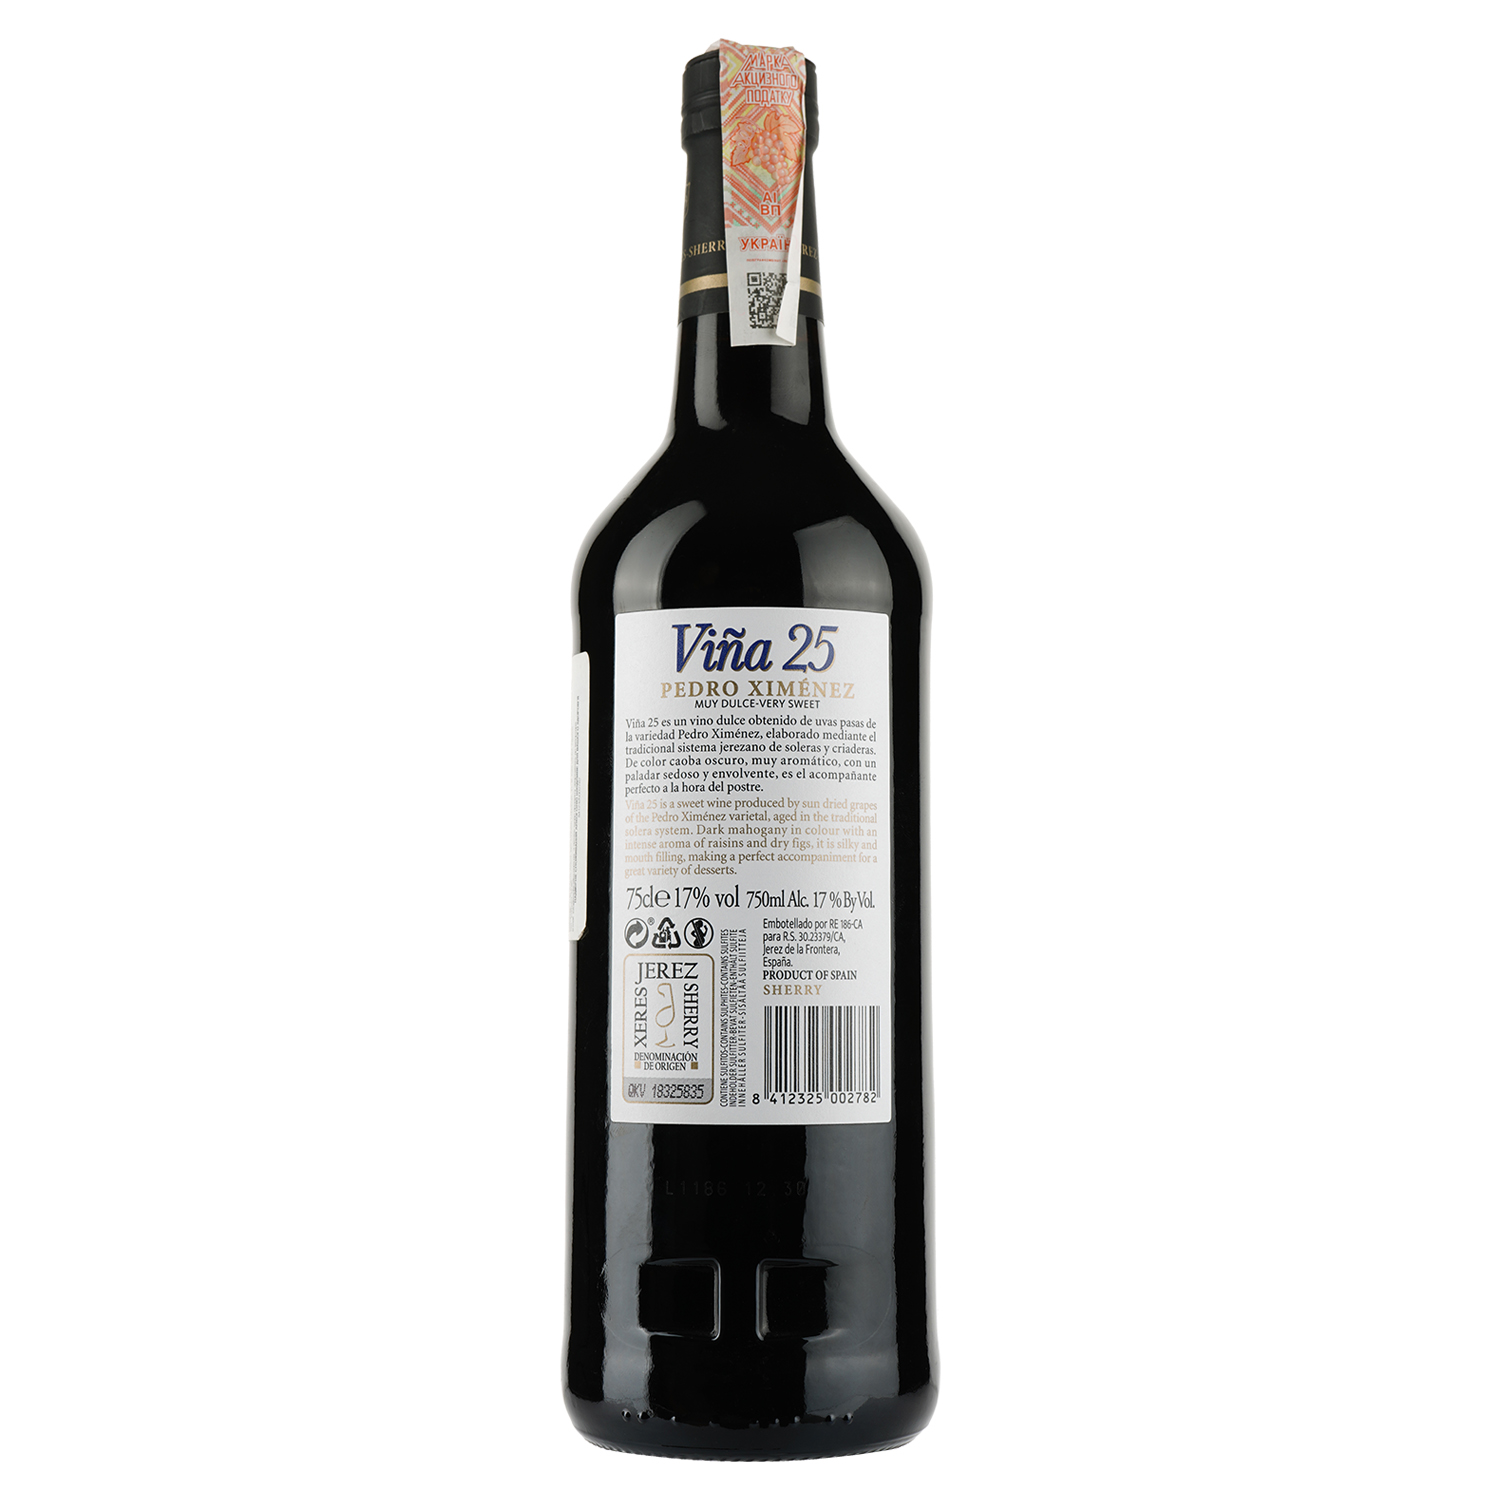 Вино La Ina херес Pedro Ximenez Sherry Vina 25, червоне, солодке, 17%, 0,75 л - фото 2